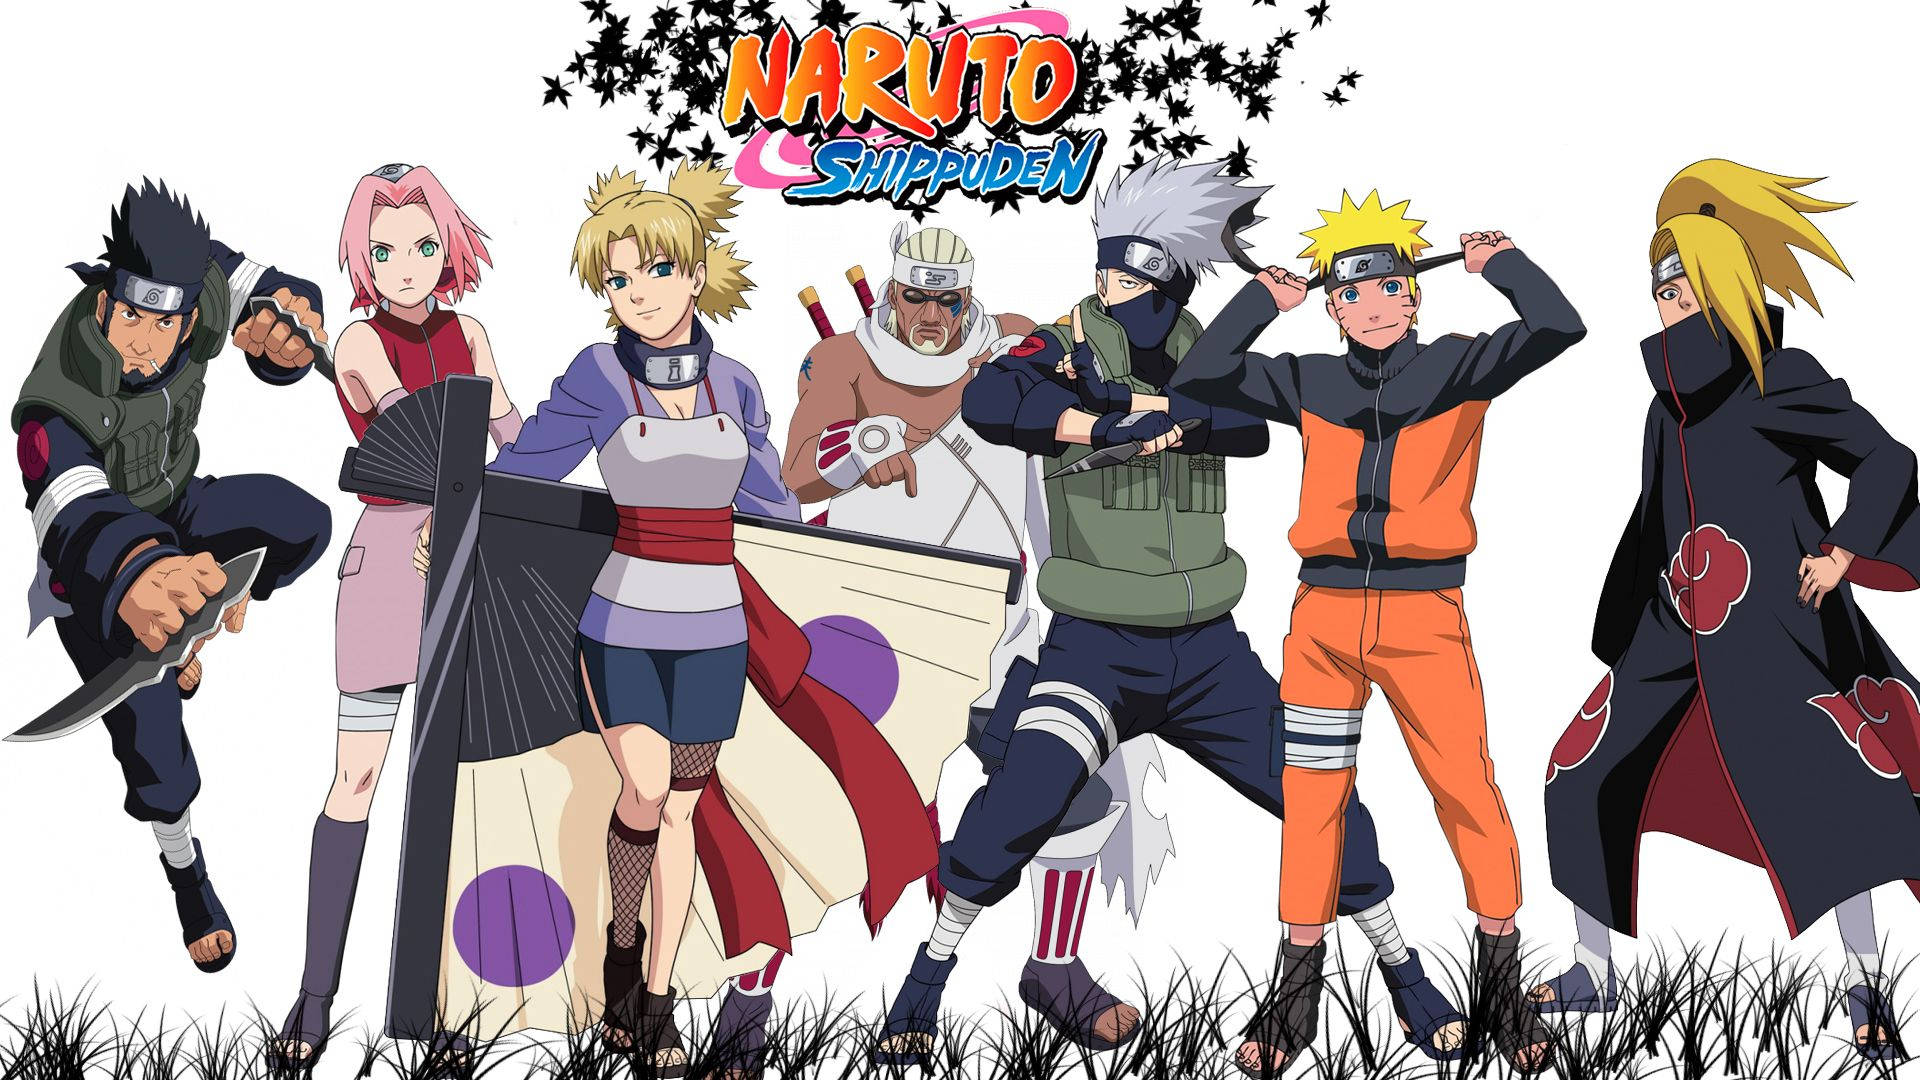 Follow Naruto and the Powerful Ninjas in Shippuden Wallpaper